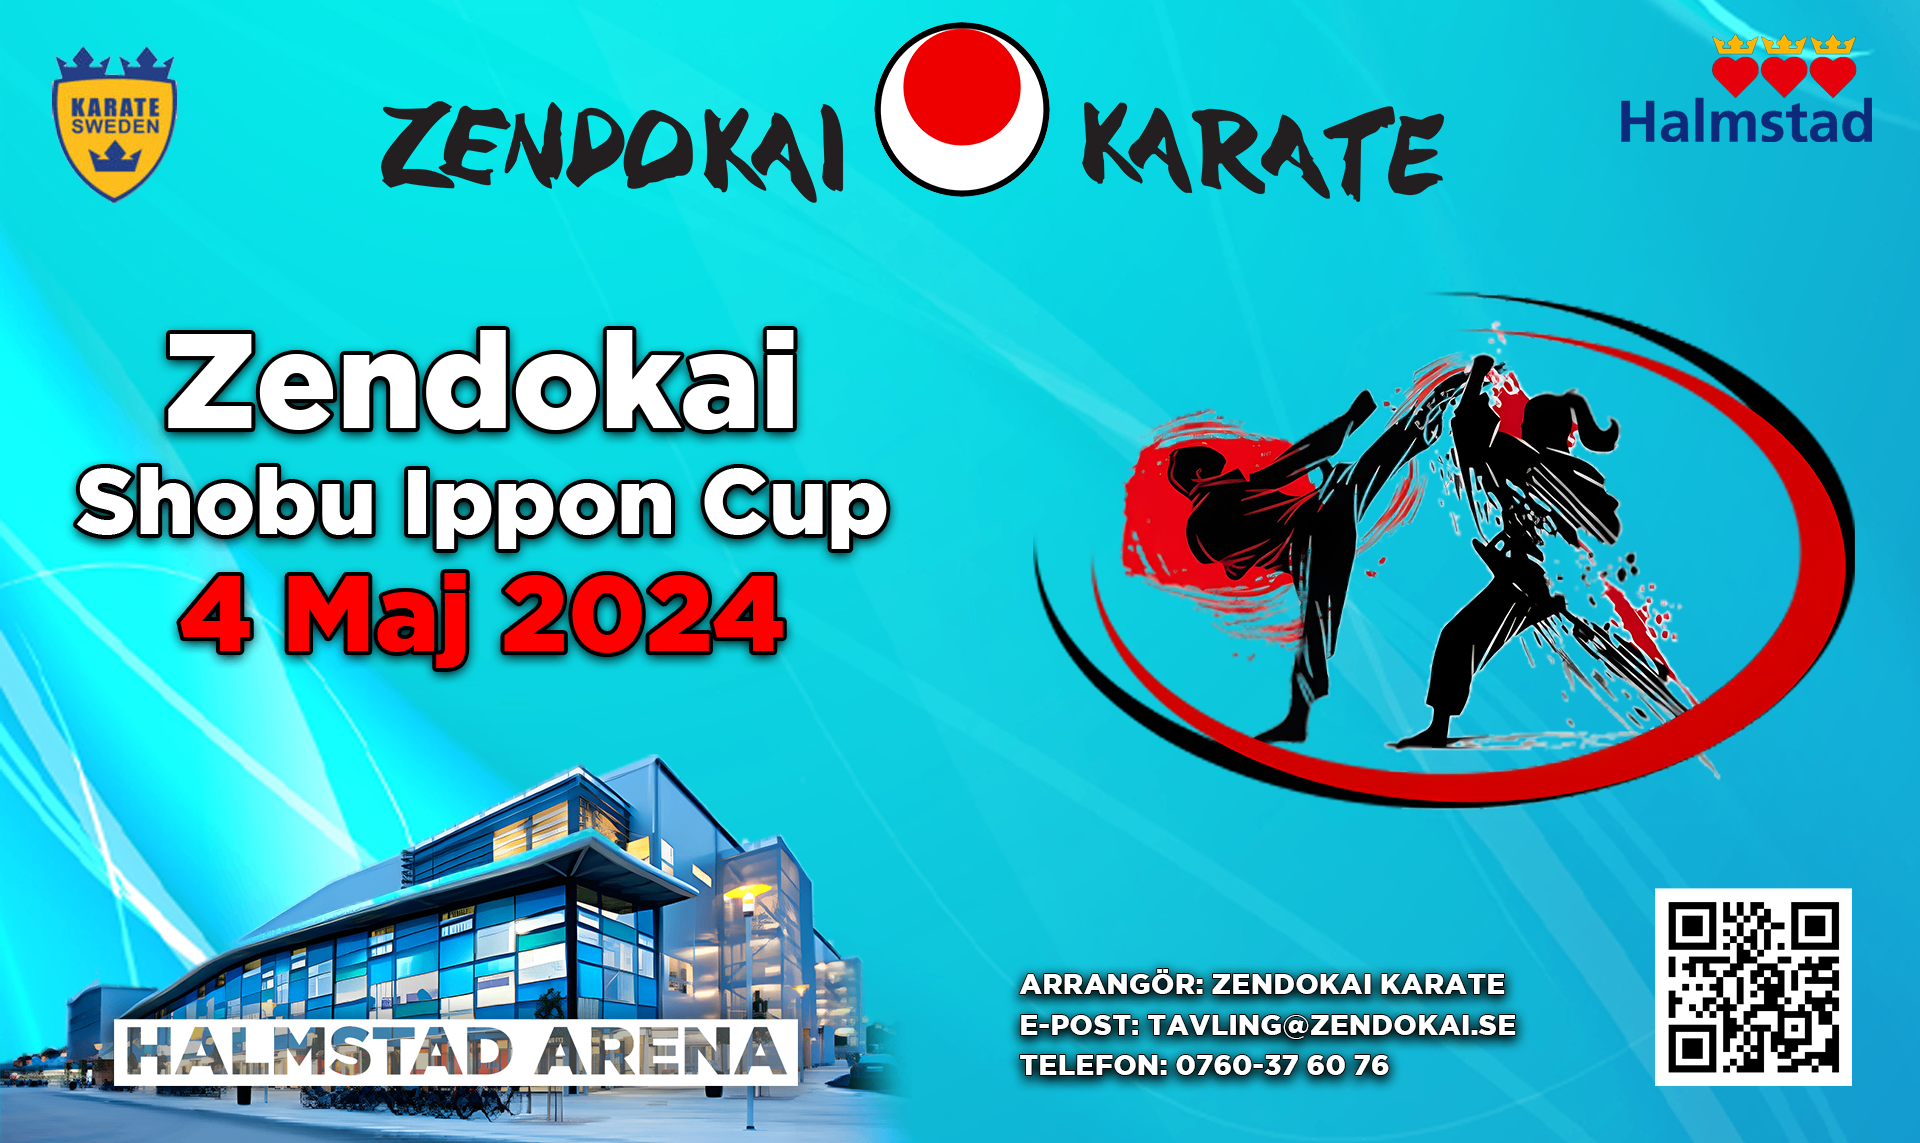 Bildbeskrivning saknas för evenemanget: Zendokai Shobu Ippon Cup 2024